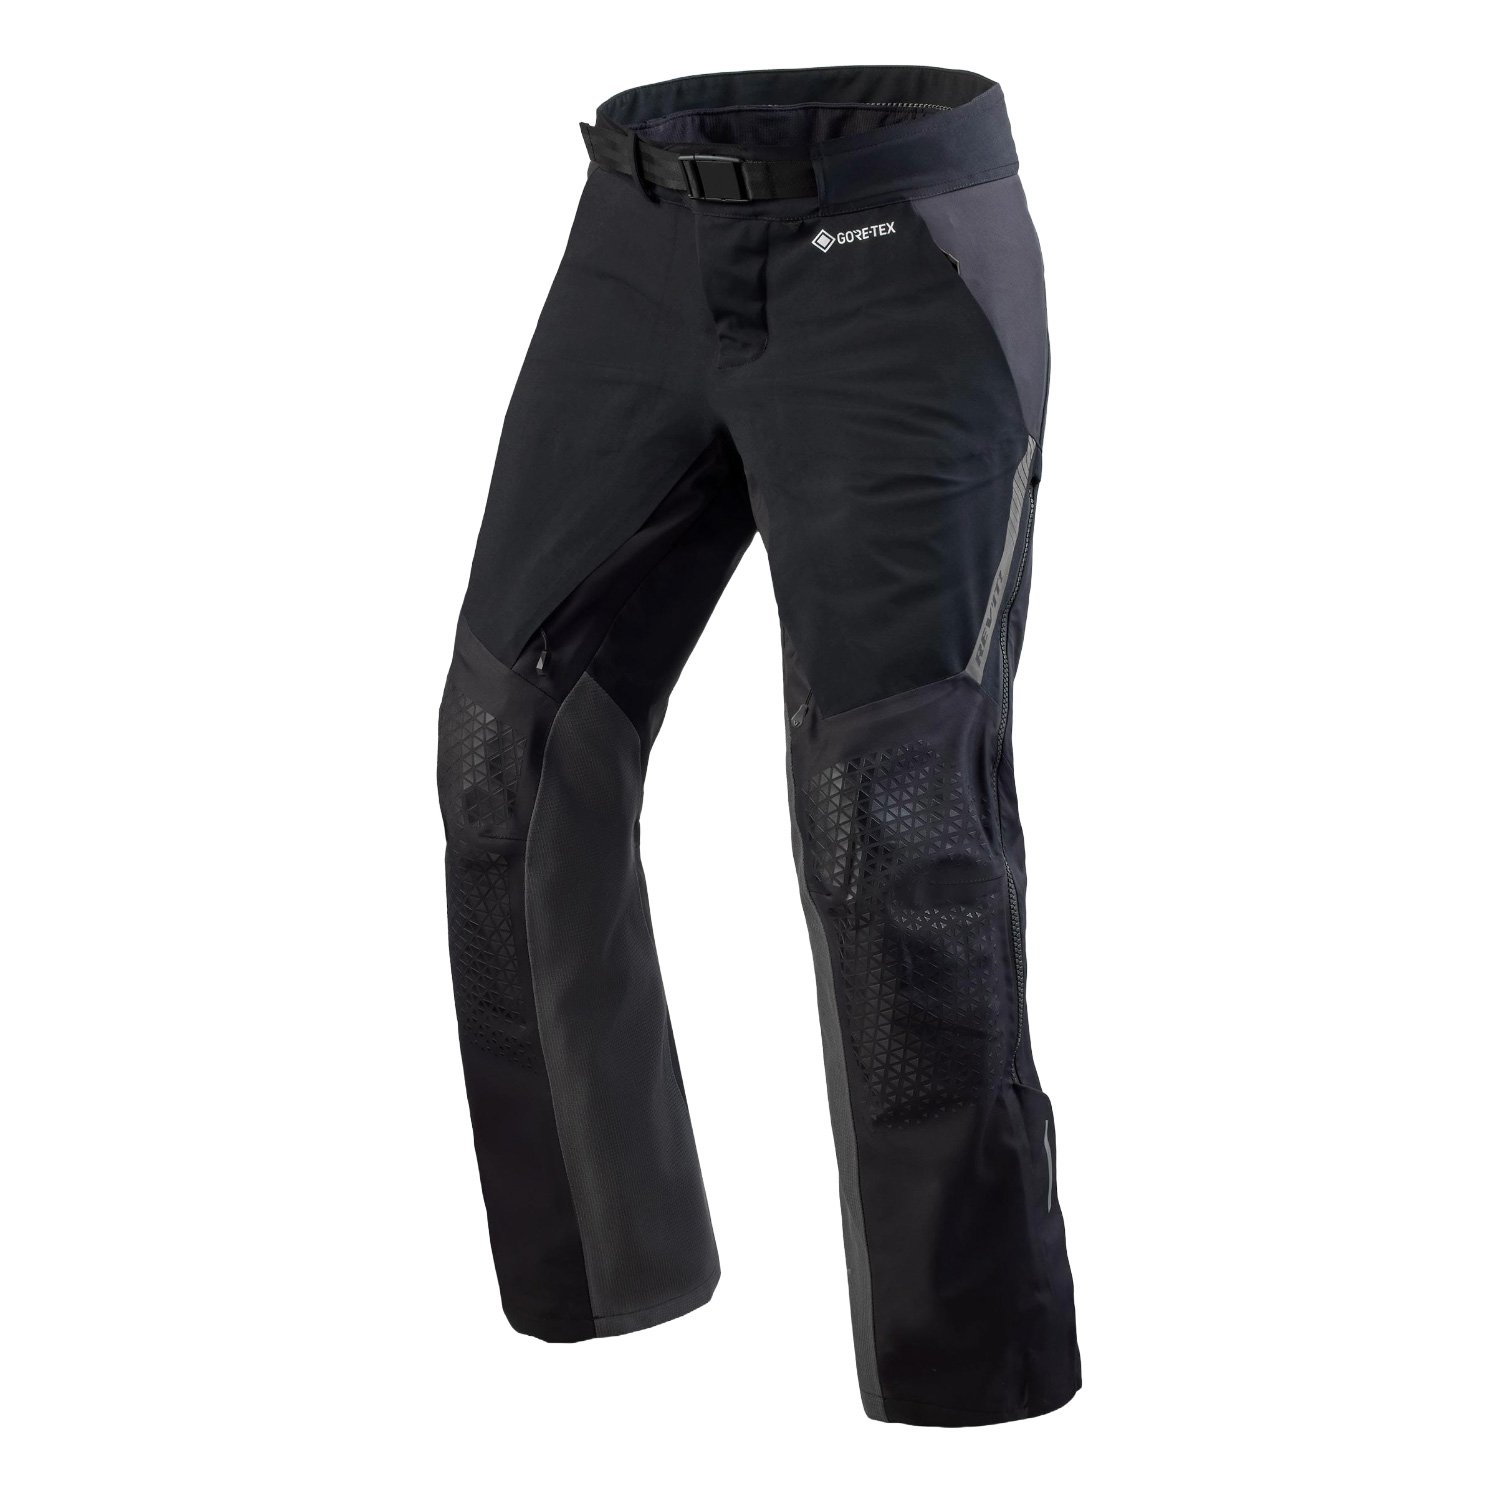 Image of REV'IT! Stratum GTX Black Grey Standard Motorcycle Pants Size M ID 8700001351133